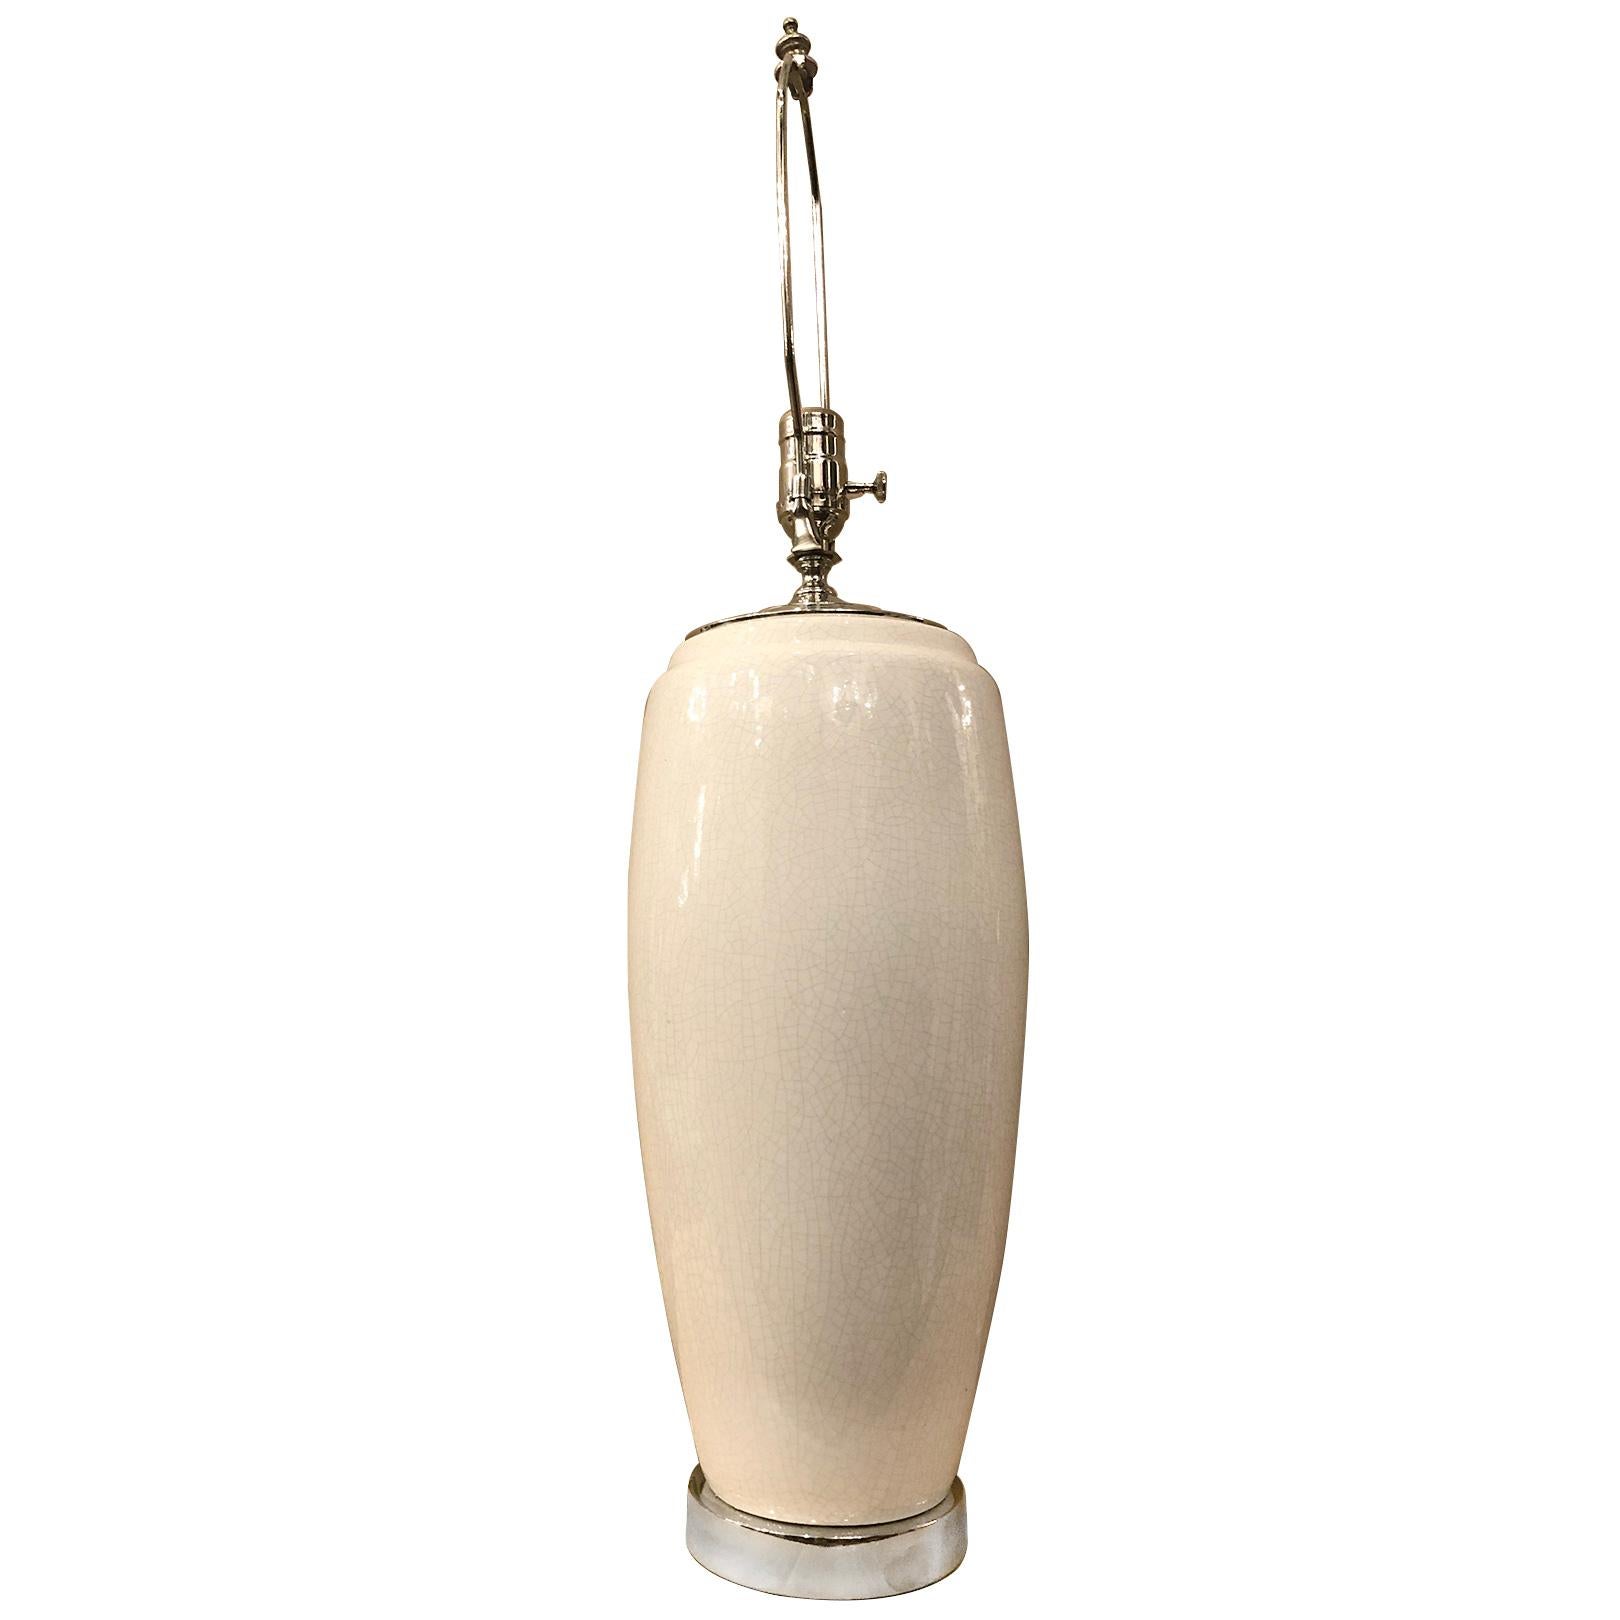 Mid-20th Century Italian Midcentury Lamp For Sale